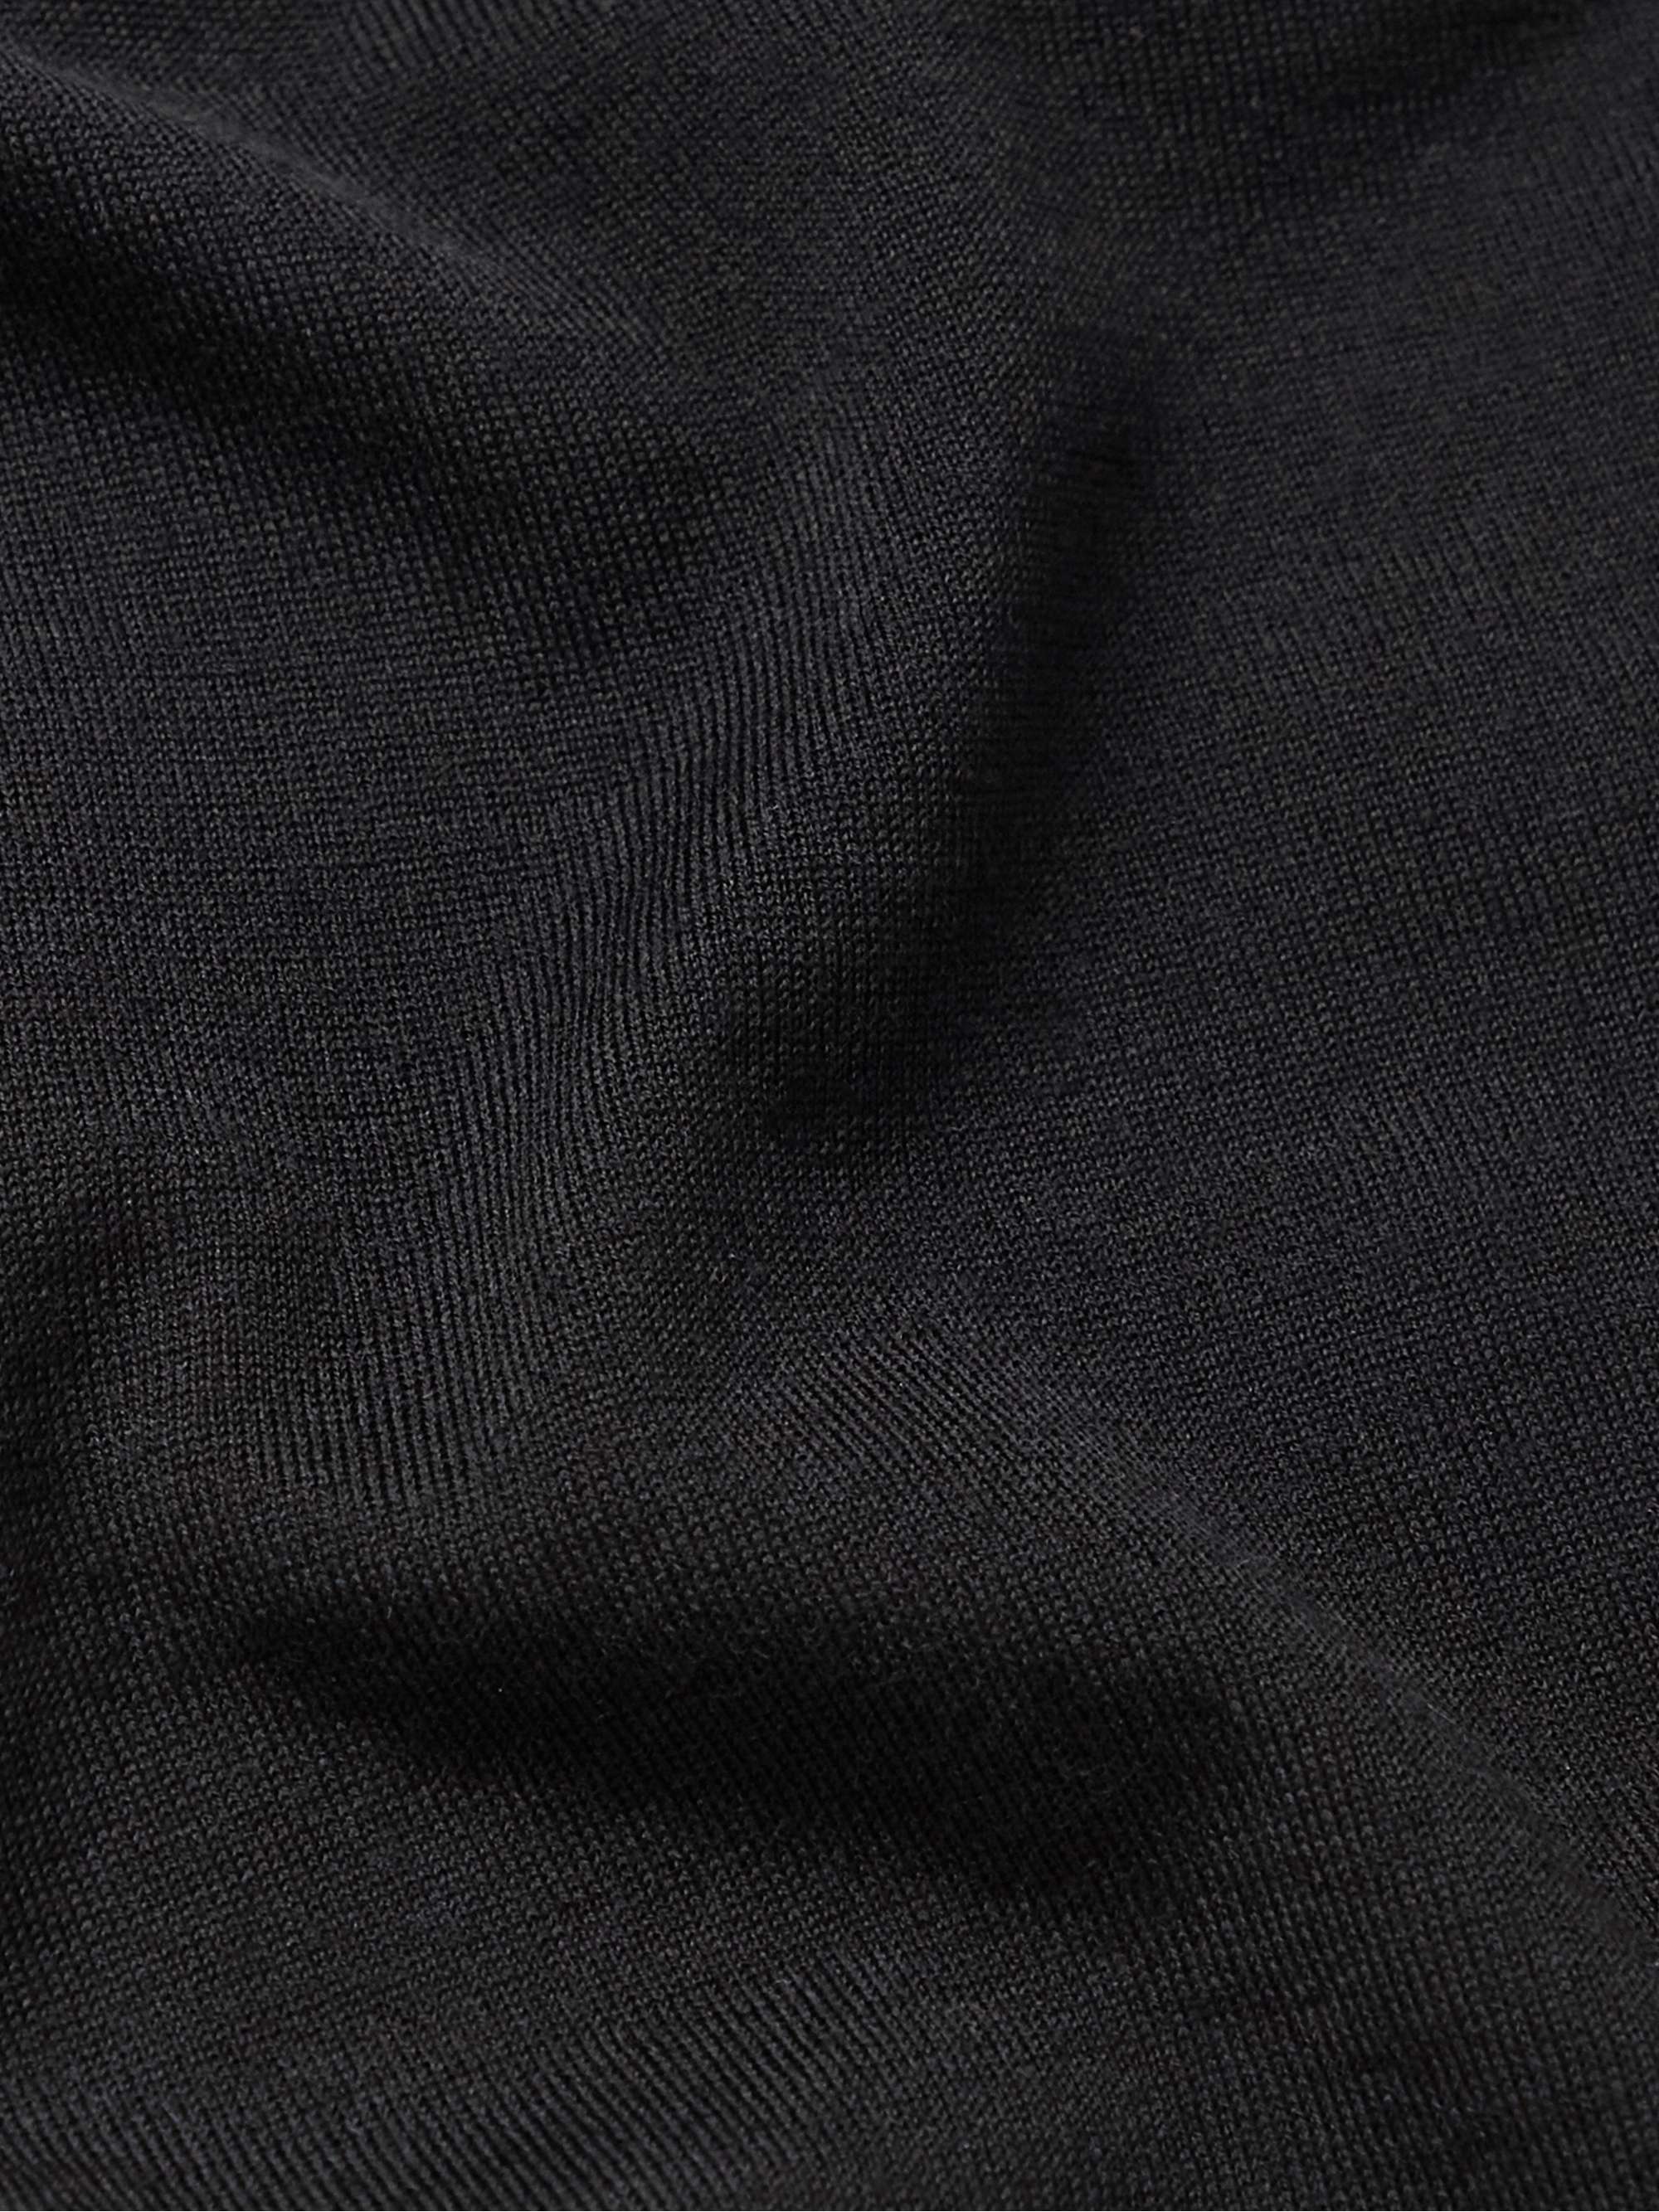 ZEGNA Slim-Fit Wool Half-Zip Sweater